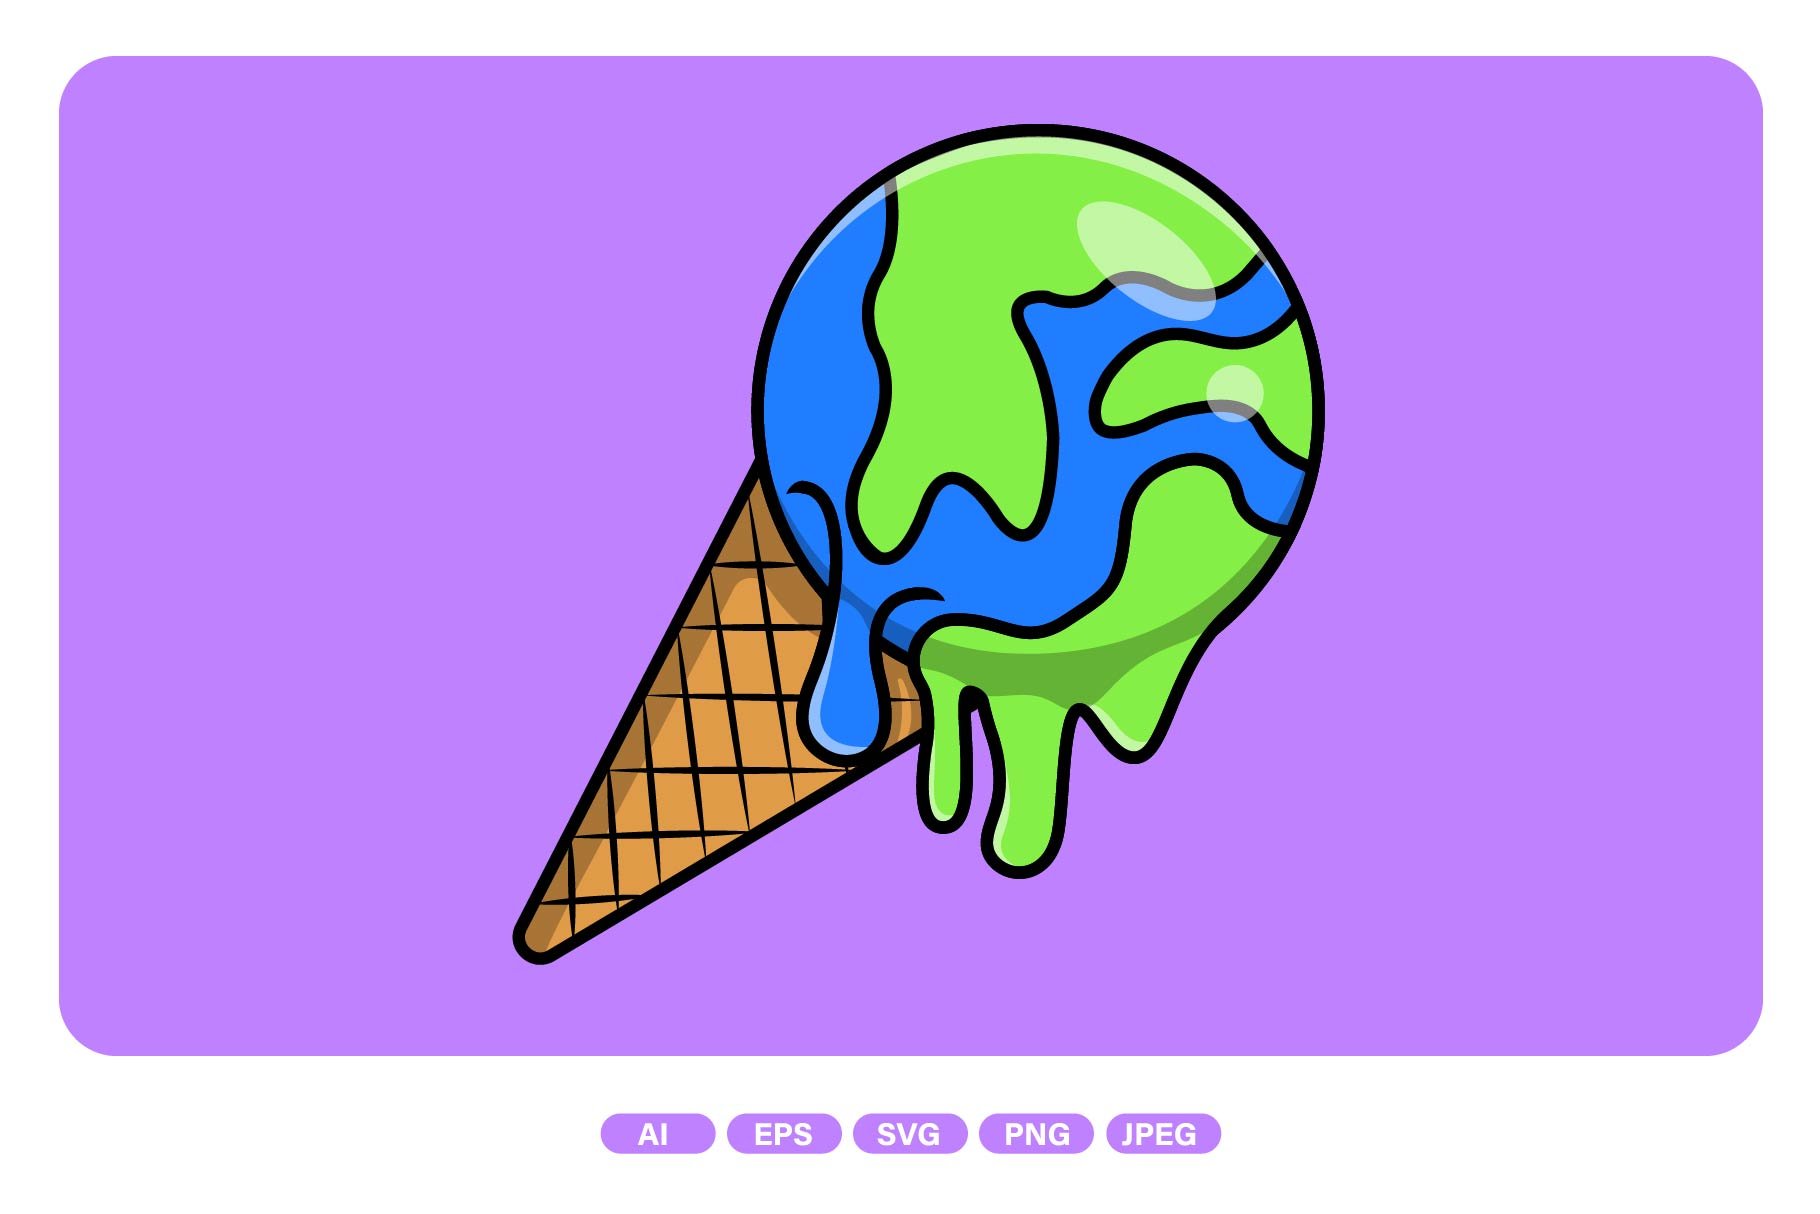 Three Balls Ice Cream Icon PNG & SVG Design For T-Shirts